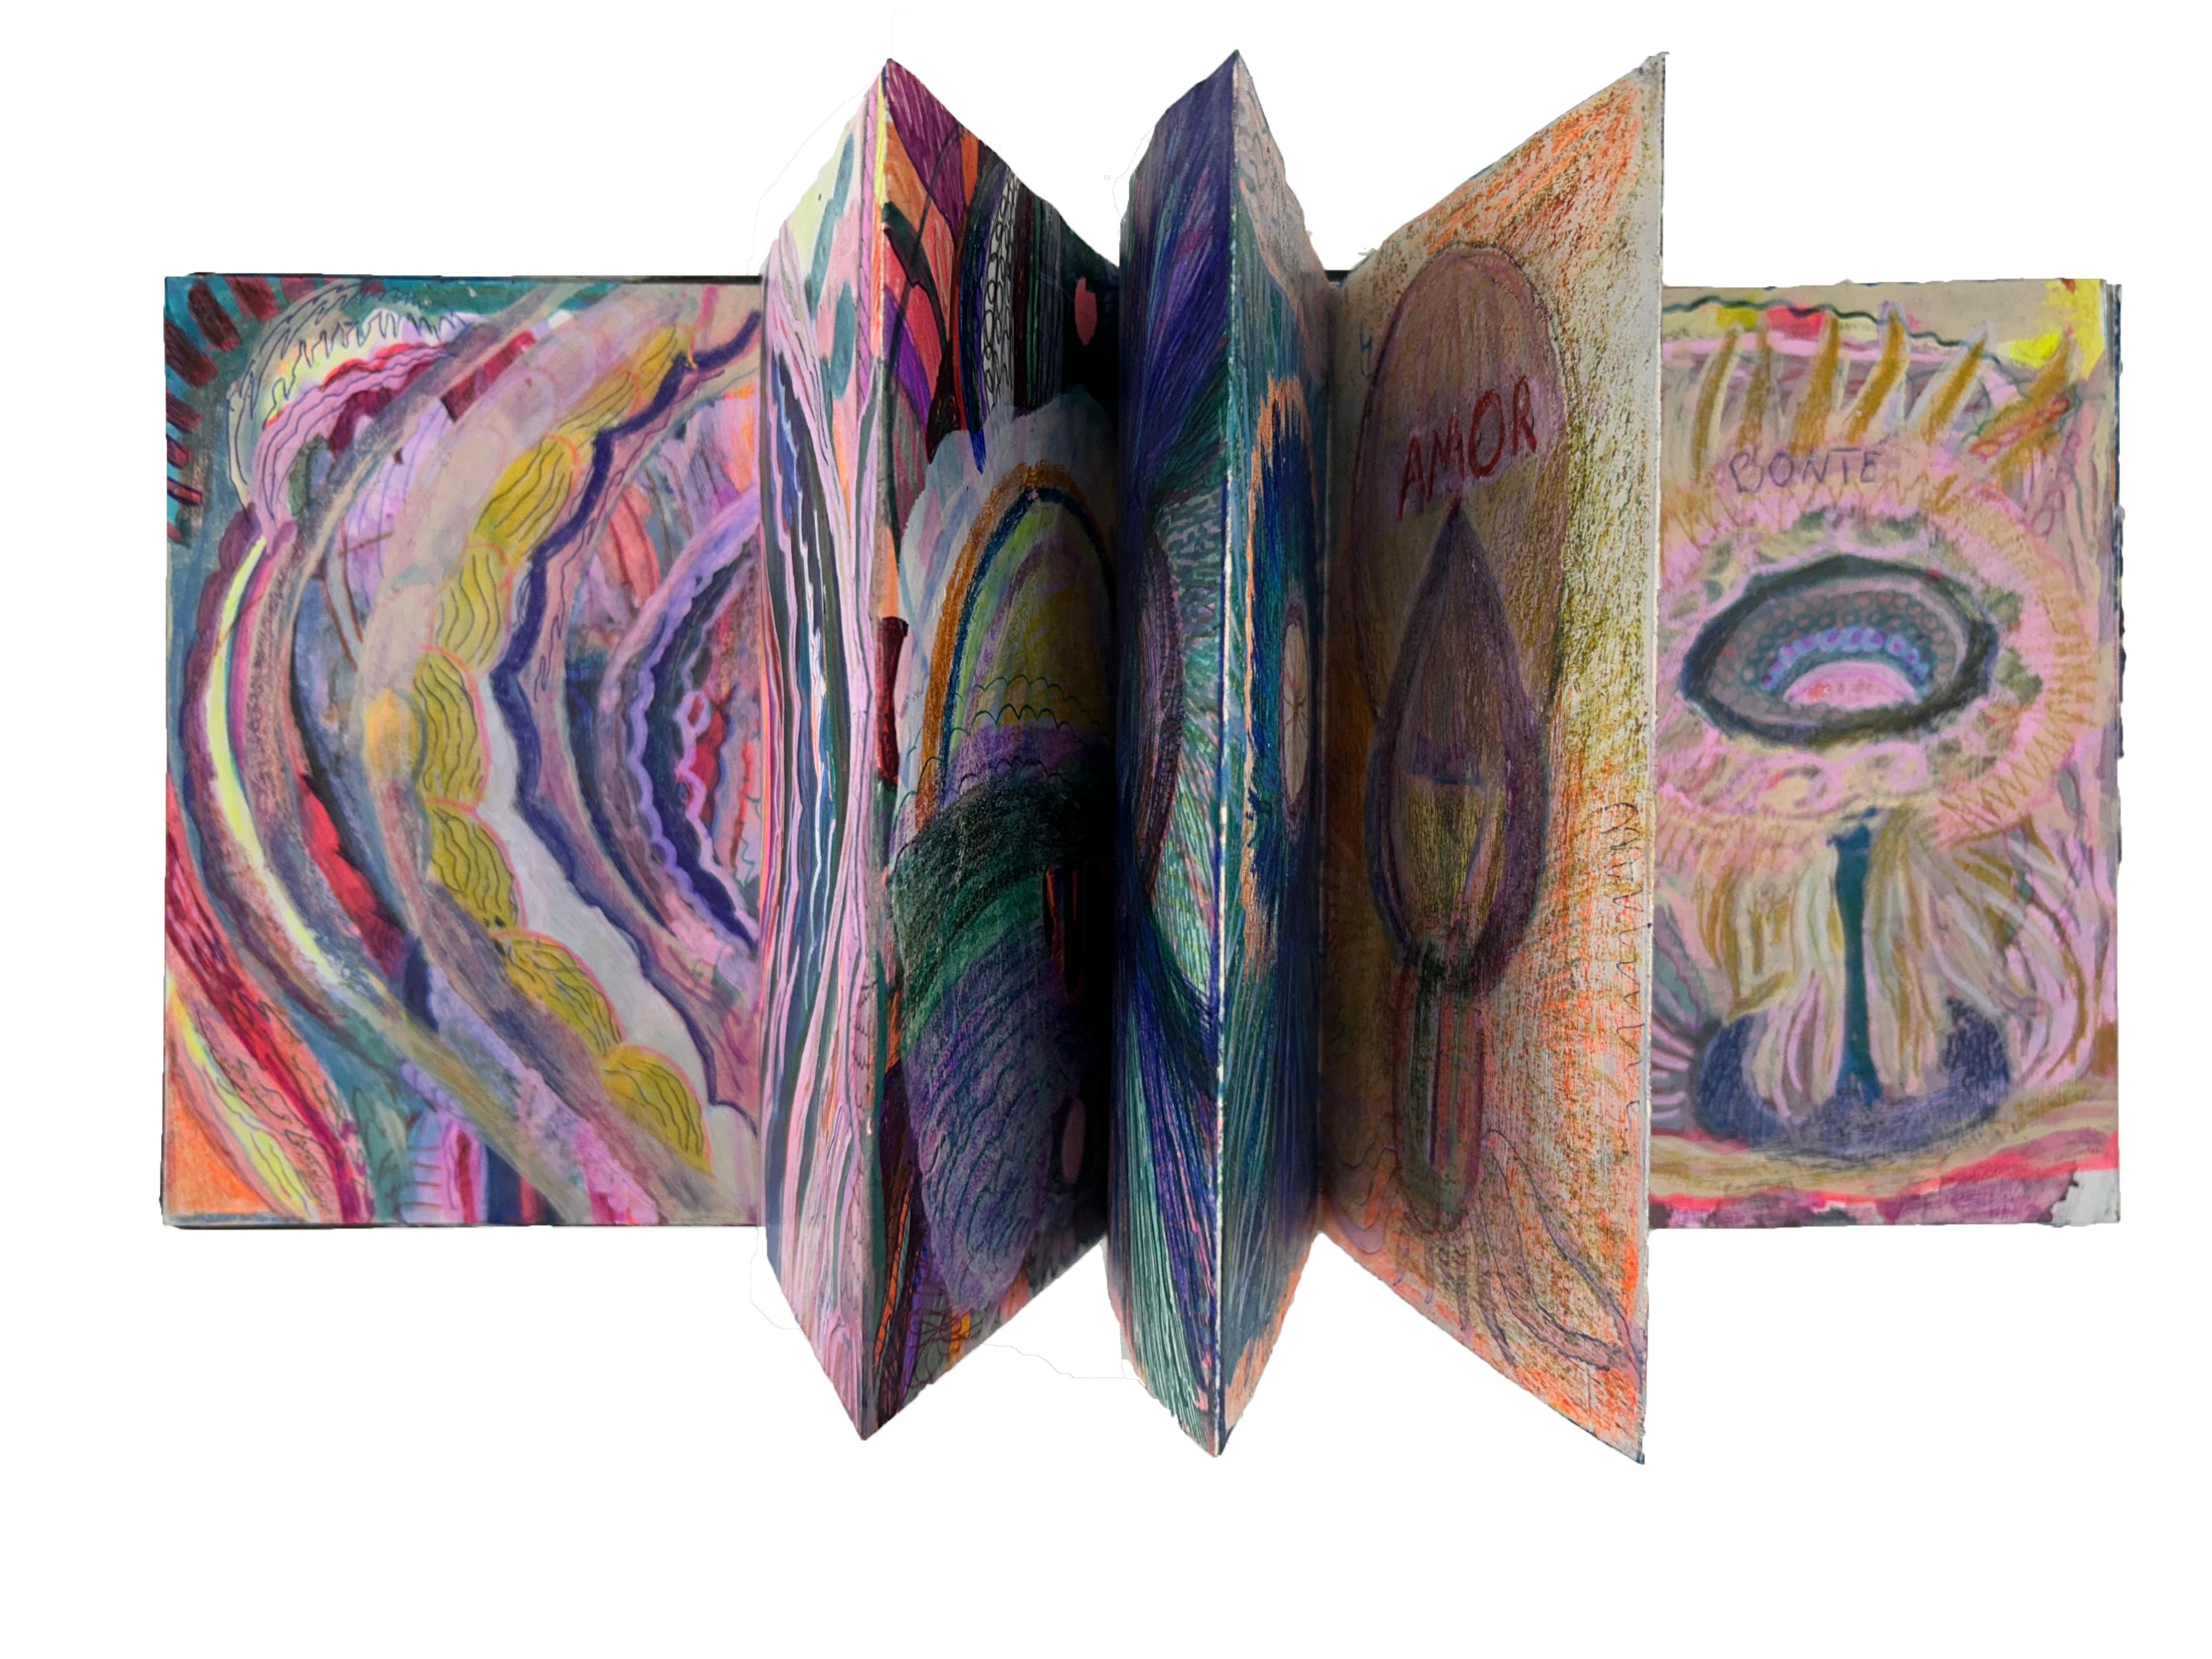 Yanieb Fabre Figurative Art - "Proceso de transformación" contemporary, double sided artist book, collage draw